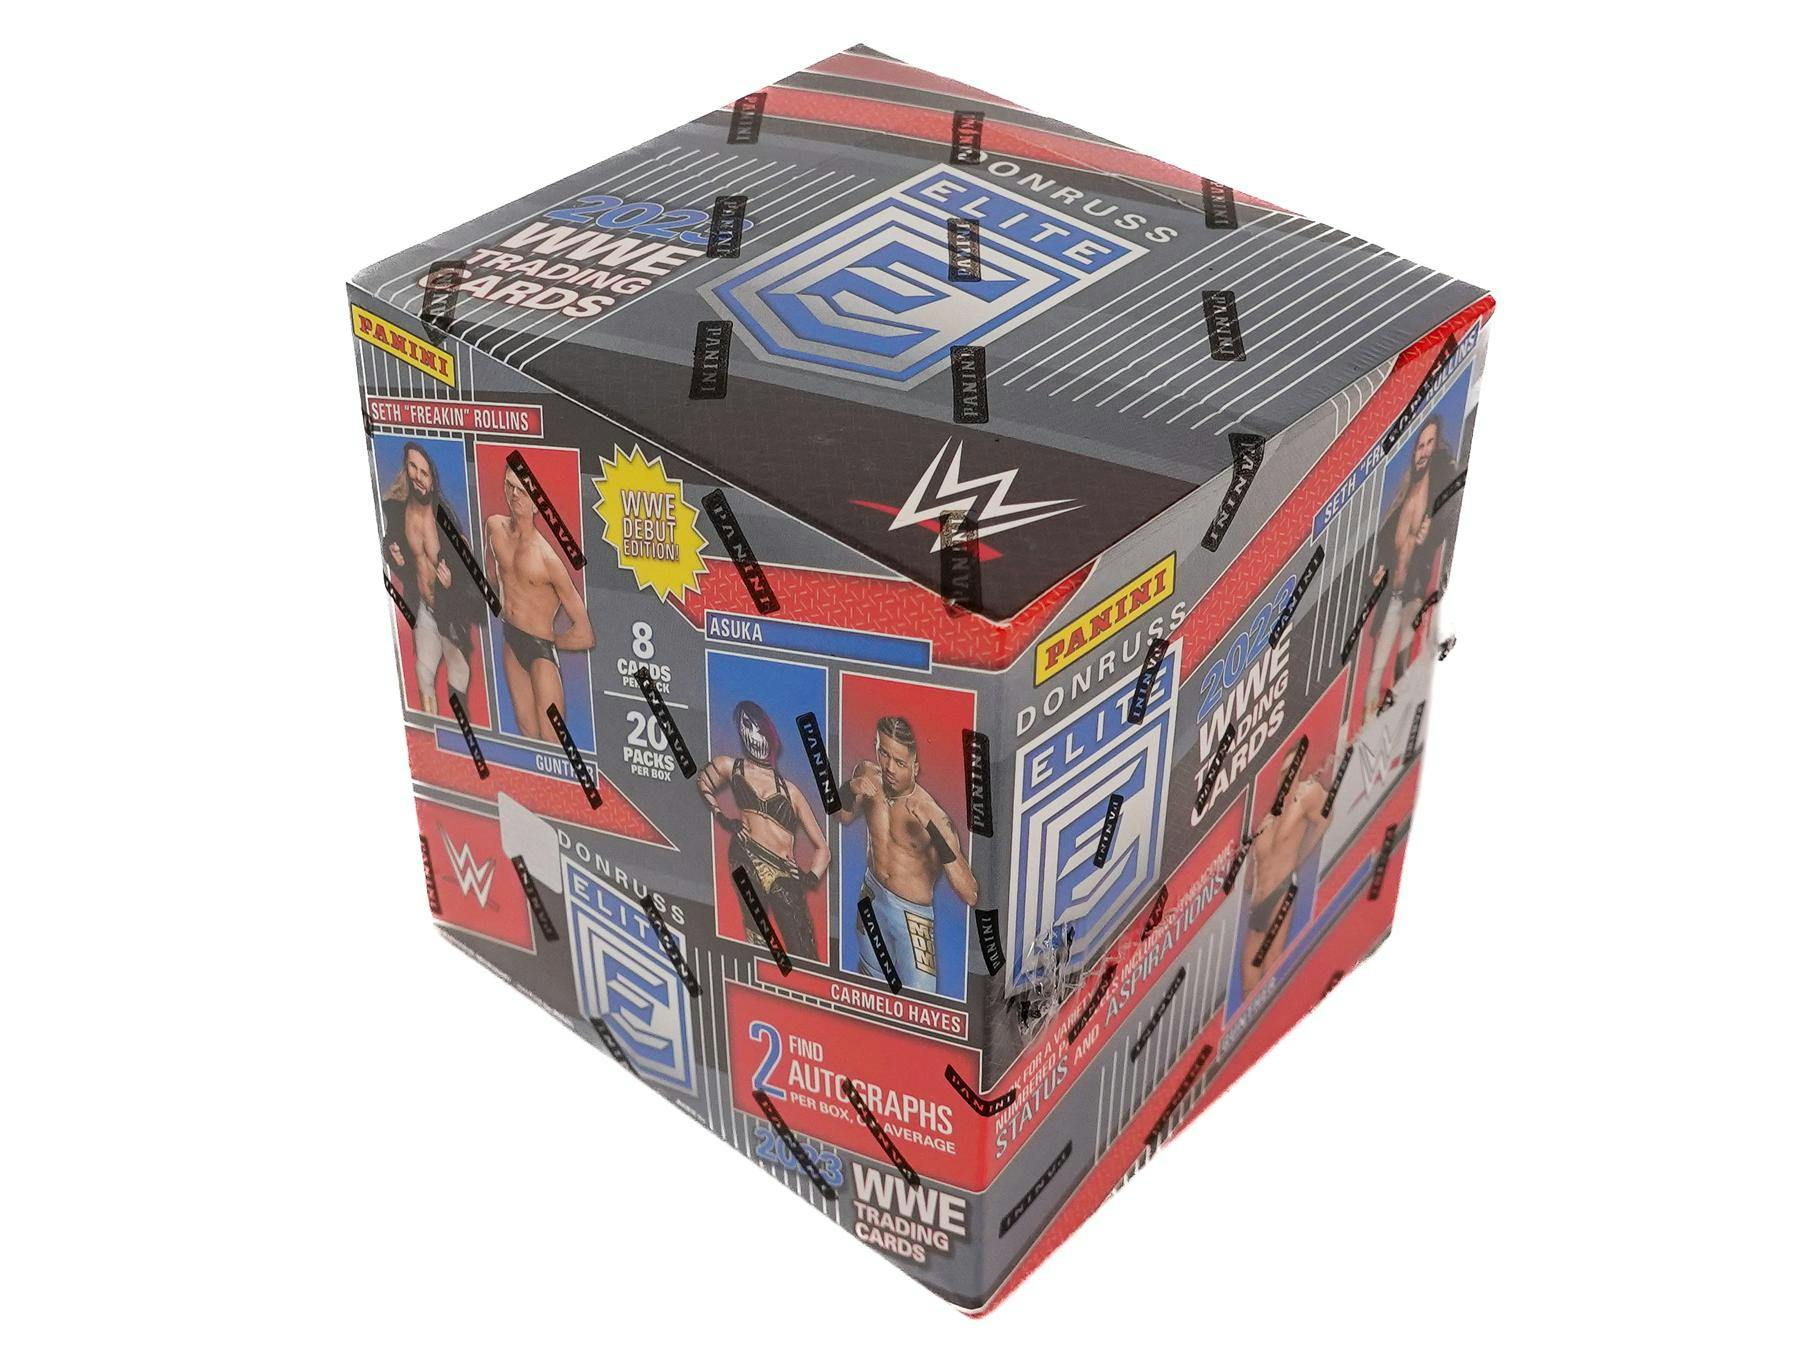 2023 Panini Donruss Elite WWE Wrestling Hobby Box - Miraj Trading